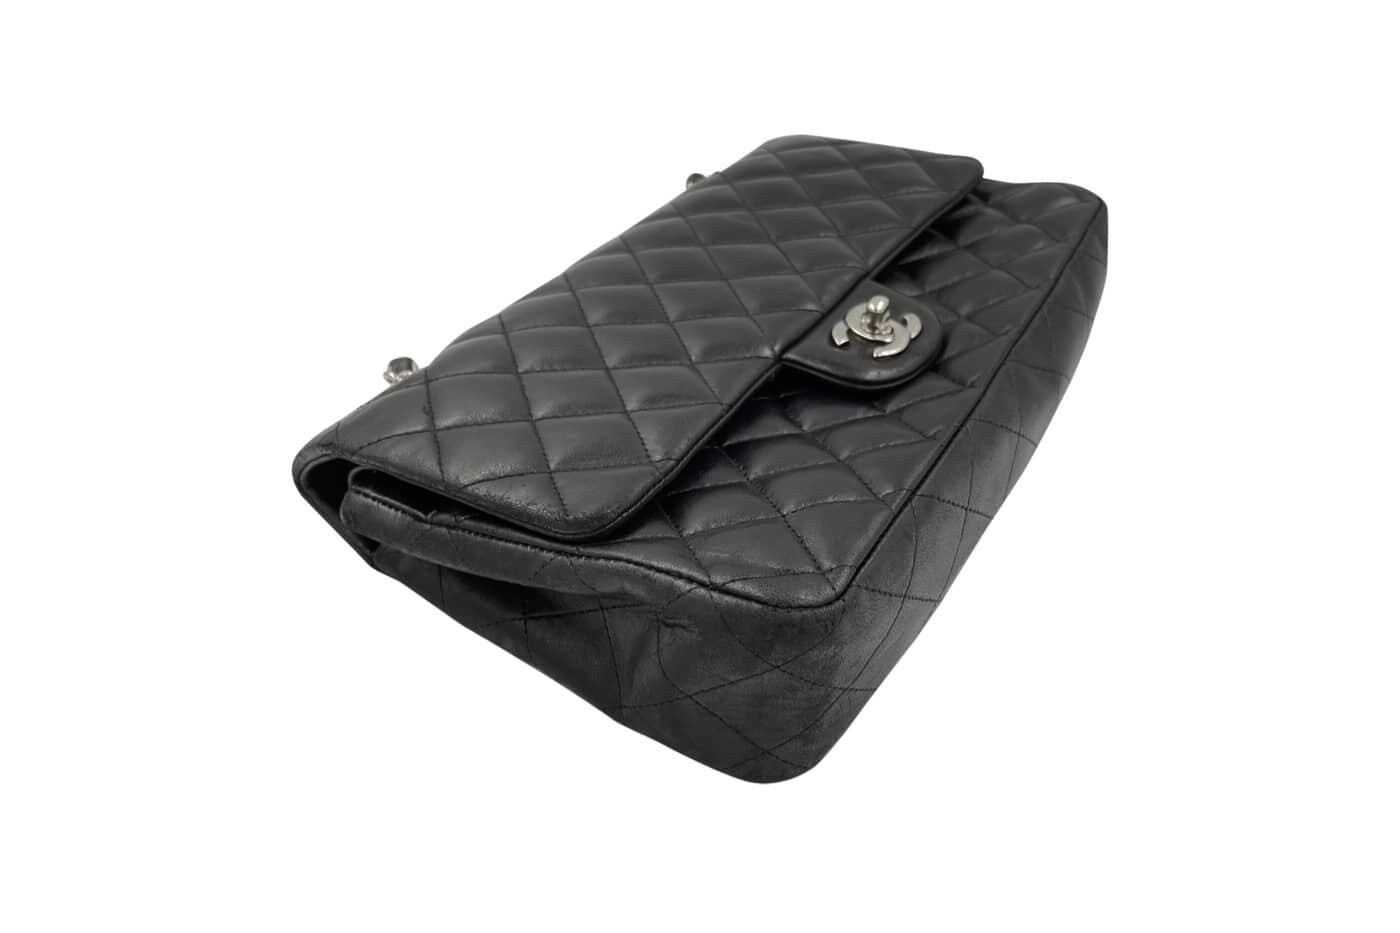 Chanel Handbag Leather Colour Restoration — SoleHeeled